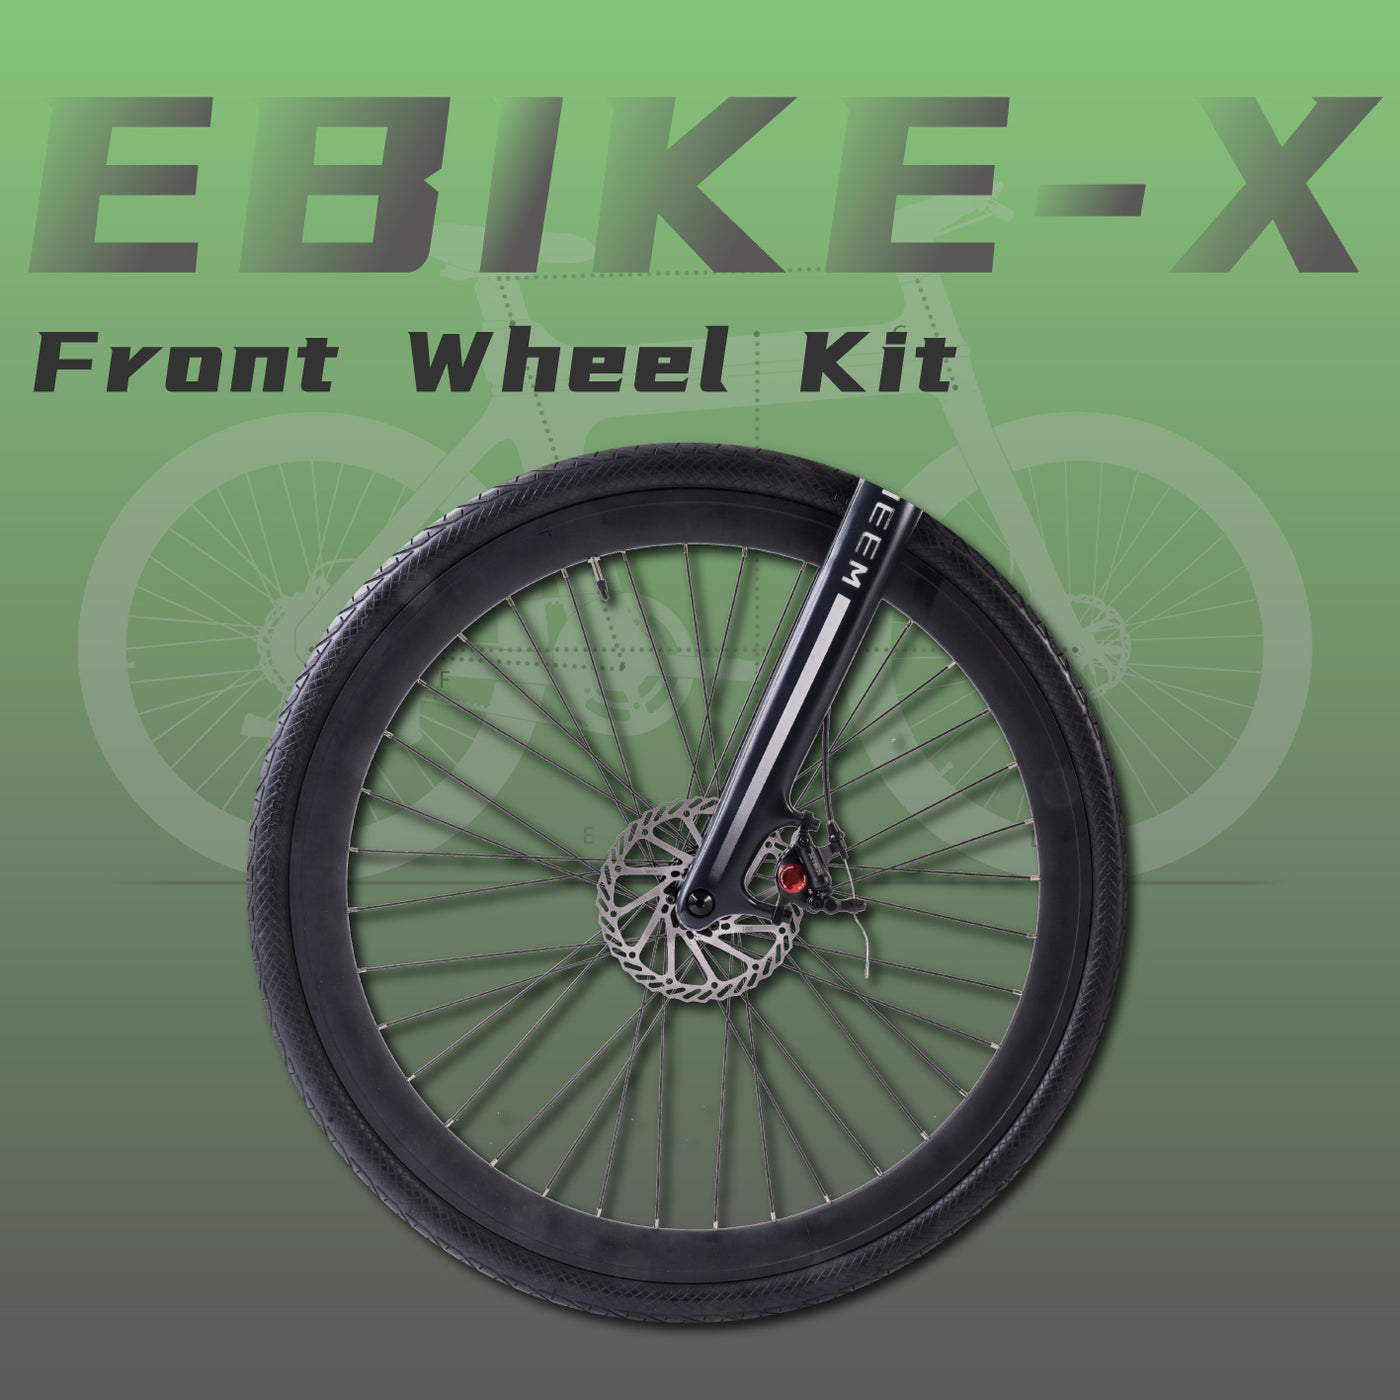 Ebike-X Front Wheel Kit